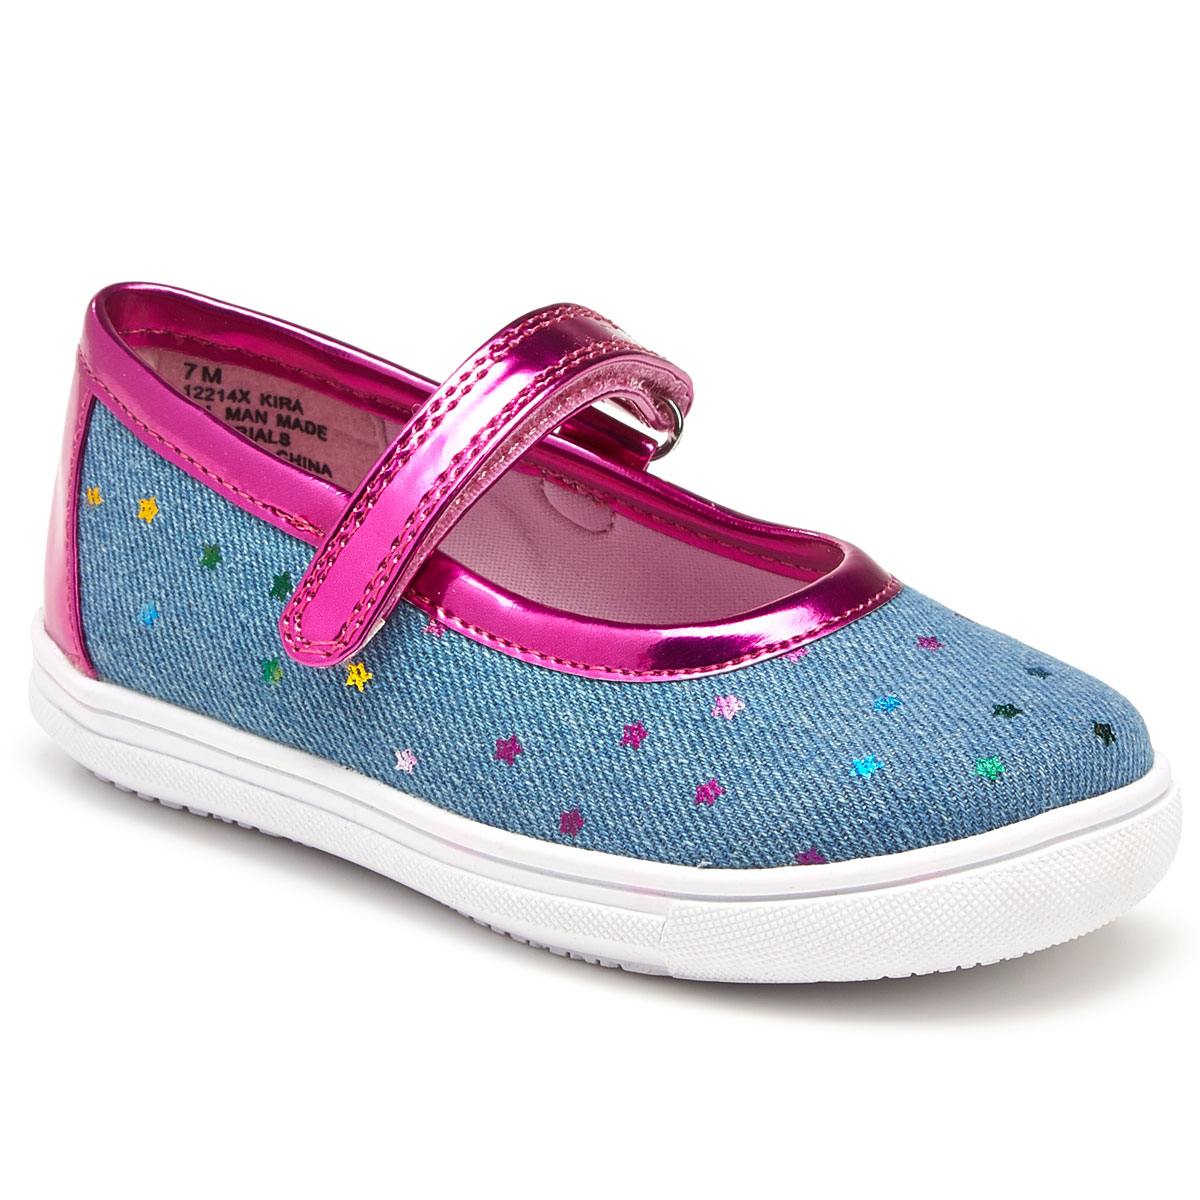 Rachel Shoes Toddler Girls' Kira Stars Mary Jane Flats - Blue, 7